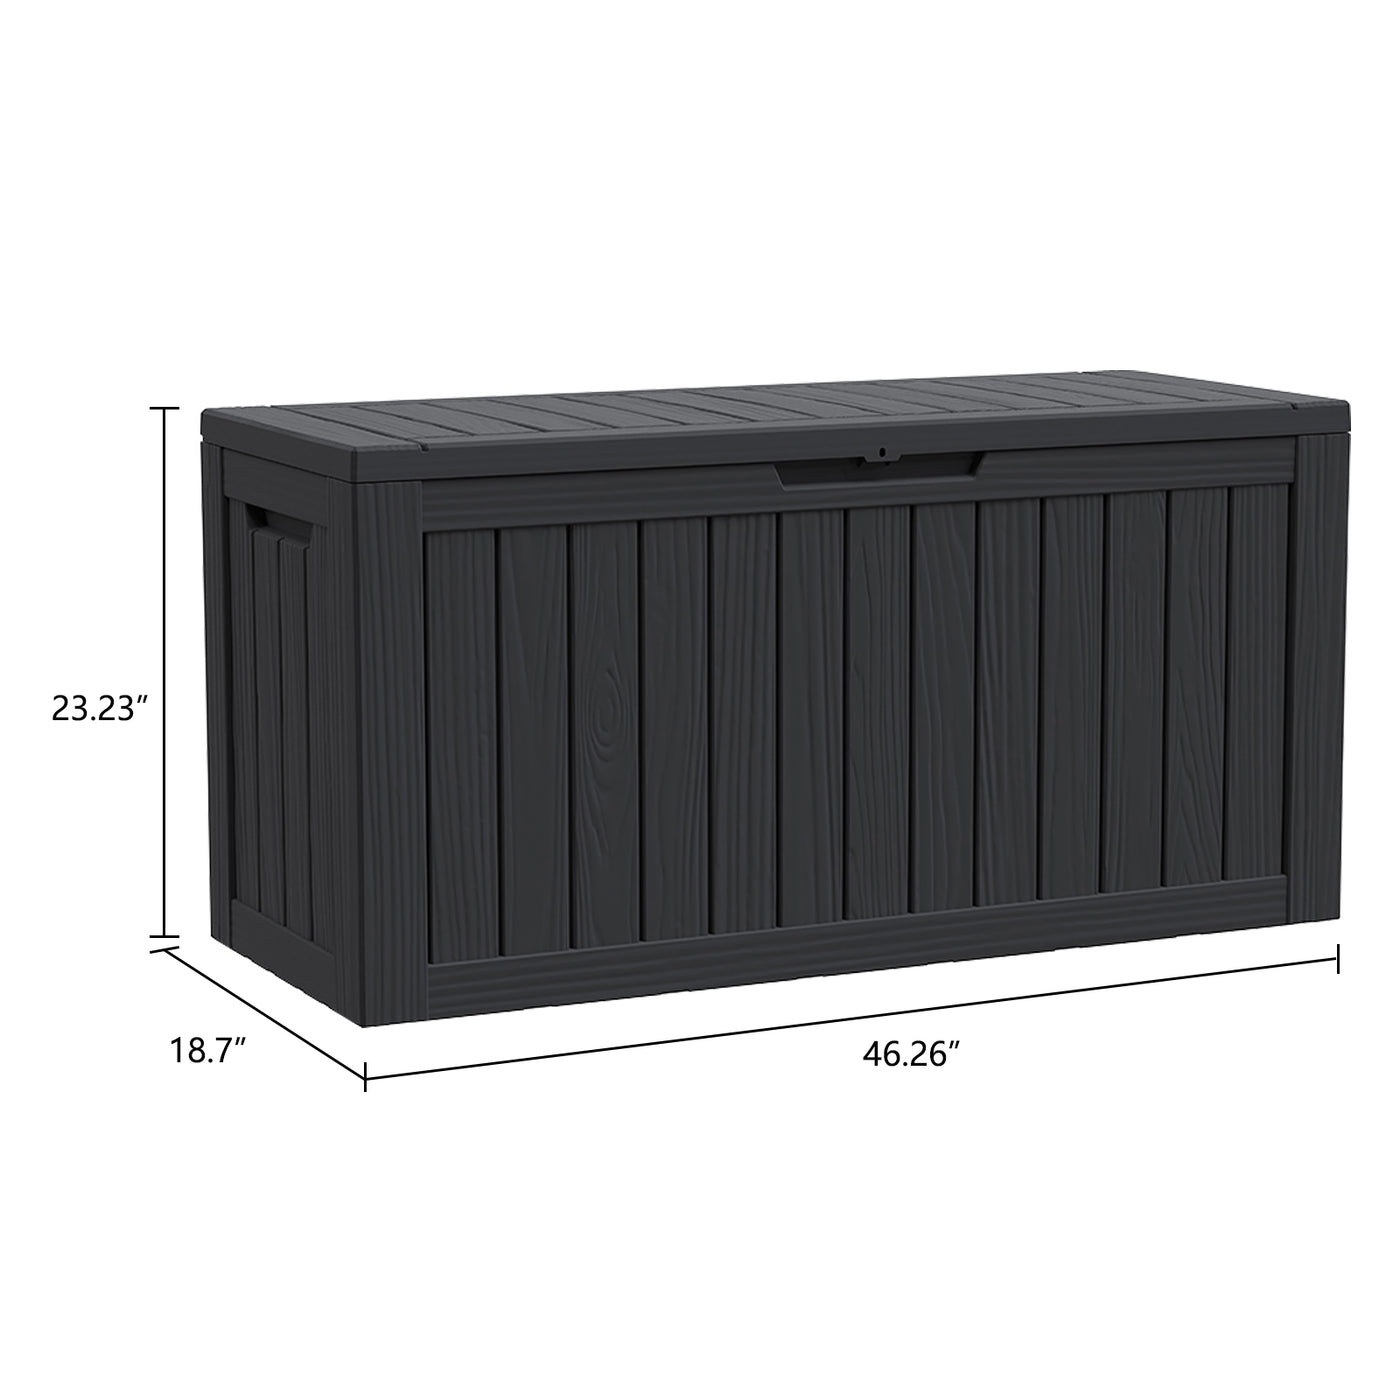 80 Gallon Waterproof Deck Box Patio Furniture Storage Box with Lockable Lid, Resin Outdoor Storage Bin for Garden, Yard, Poolside